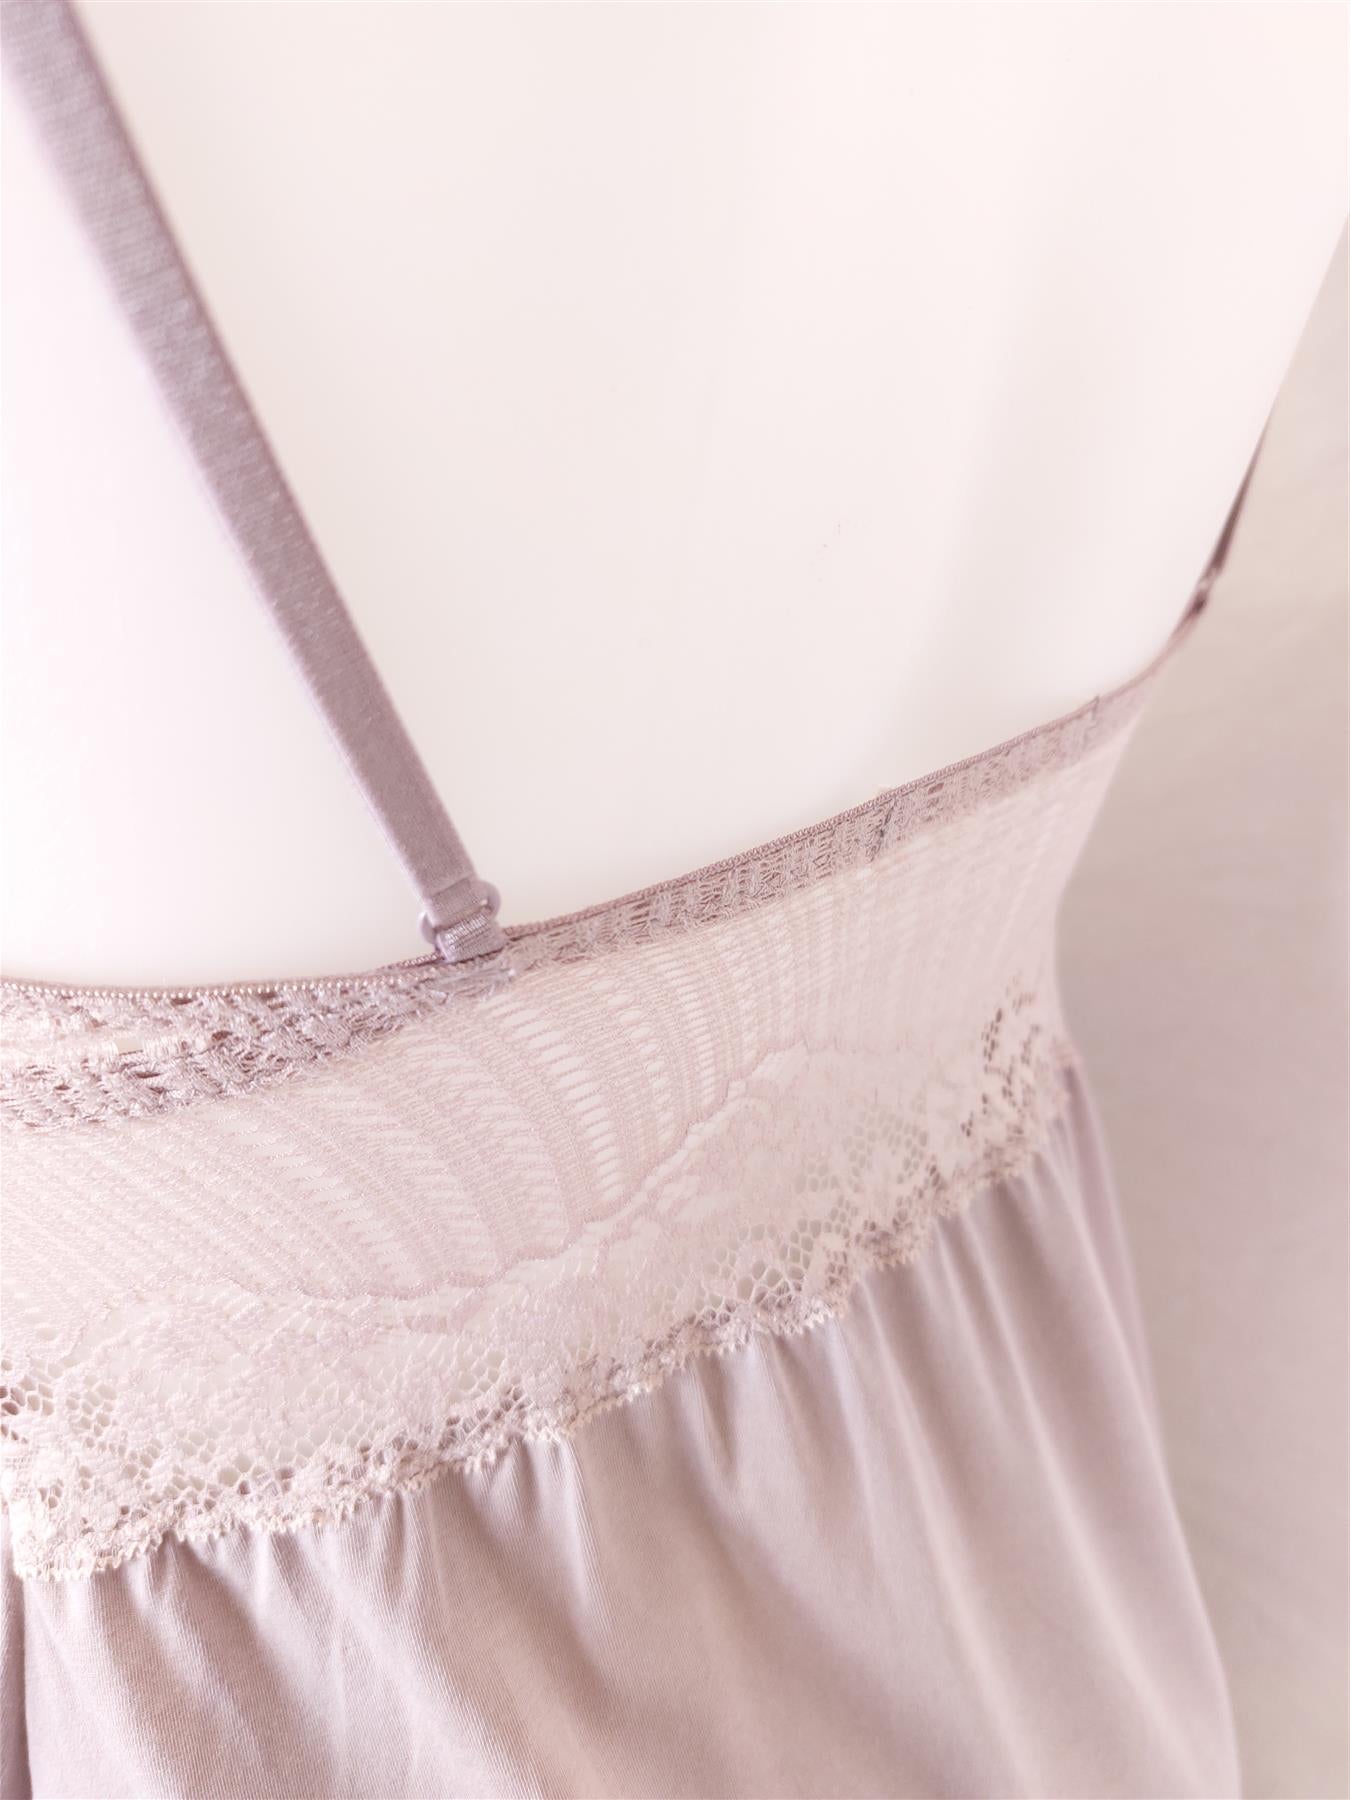 Women's Floral Lace Nightdress Soft Full Slip Padded Nightie Modal Rich Mauve